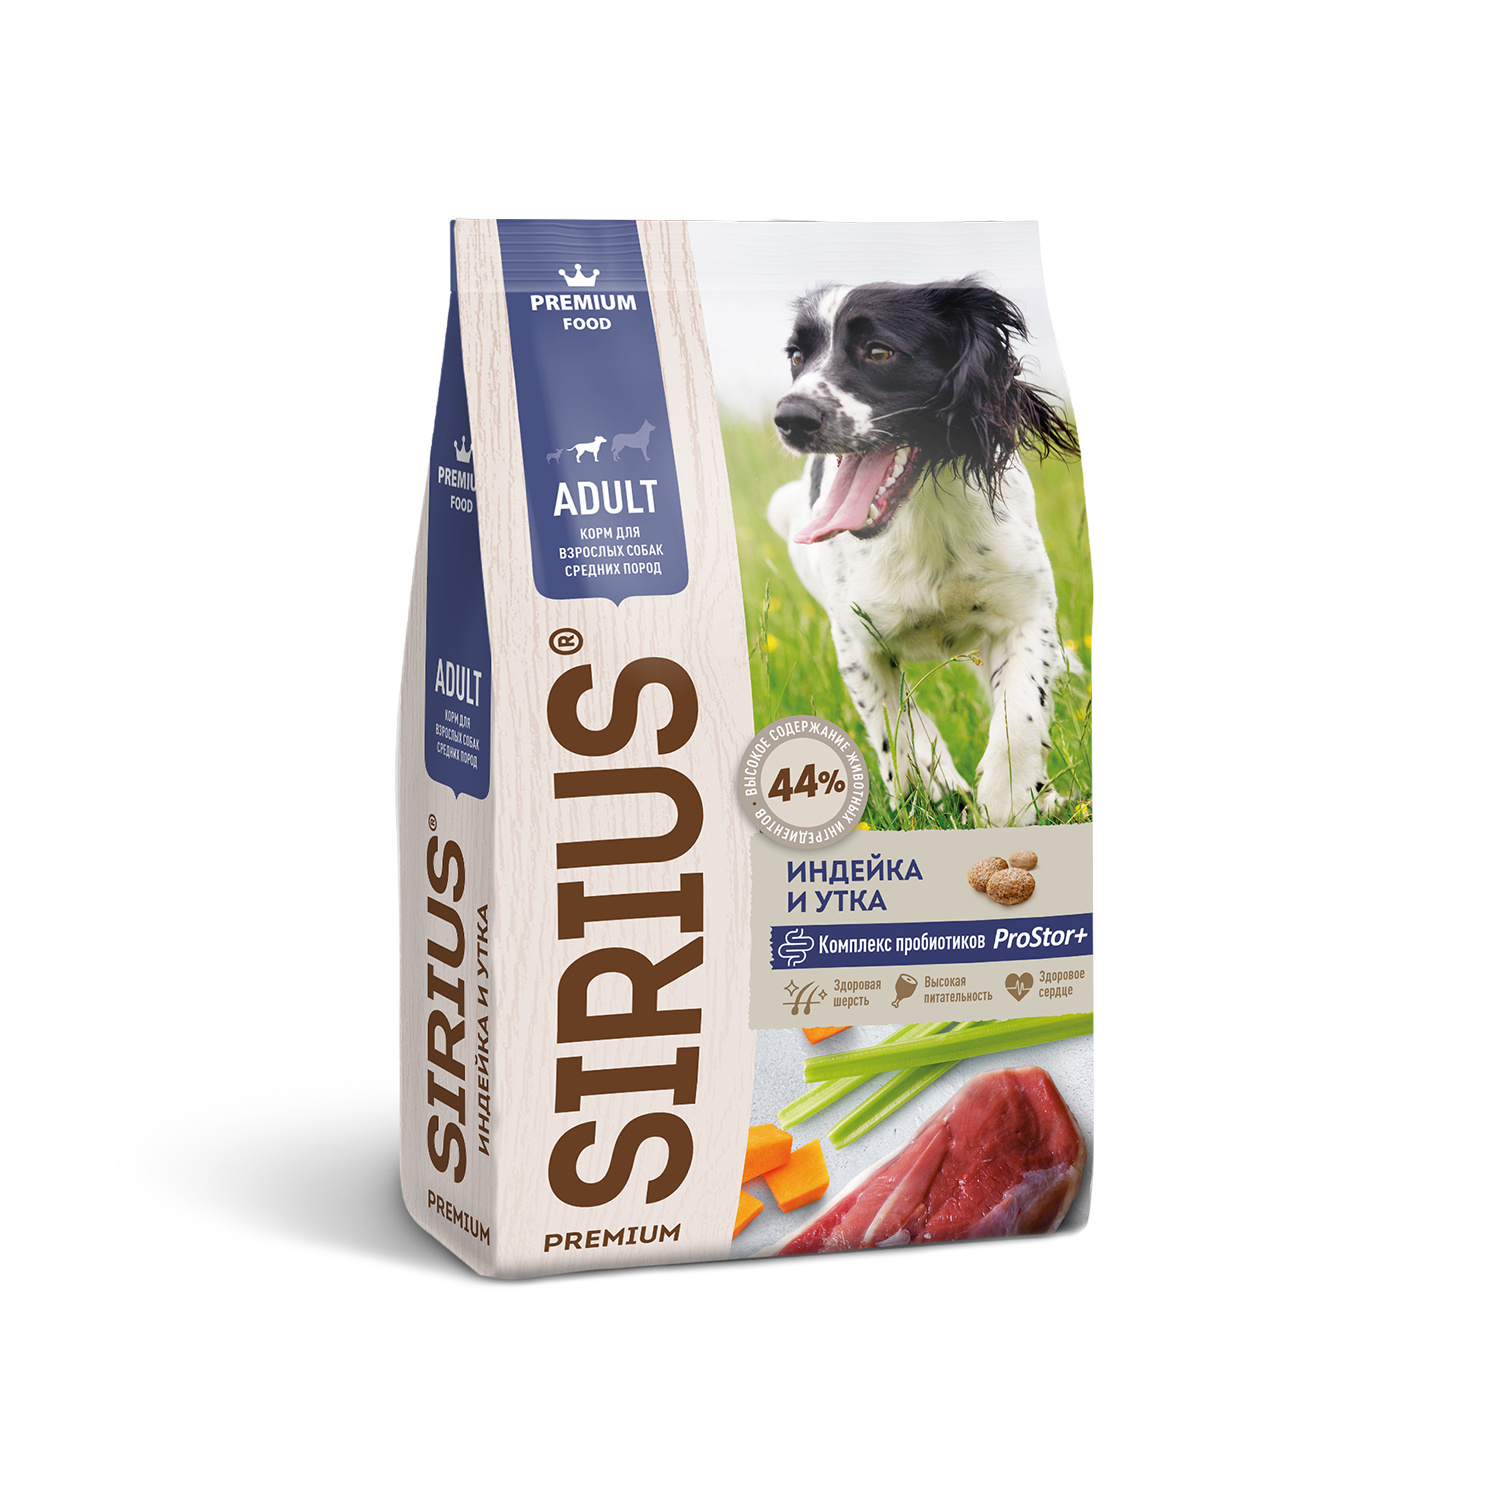 Sirius Sirius сухой корм для собак средних пород, индейка и утка (12 кг)